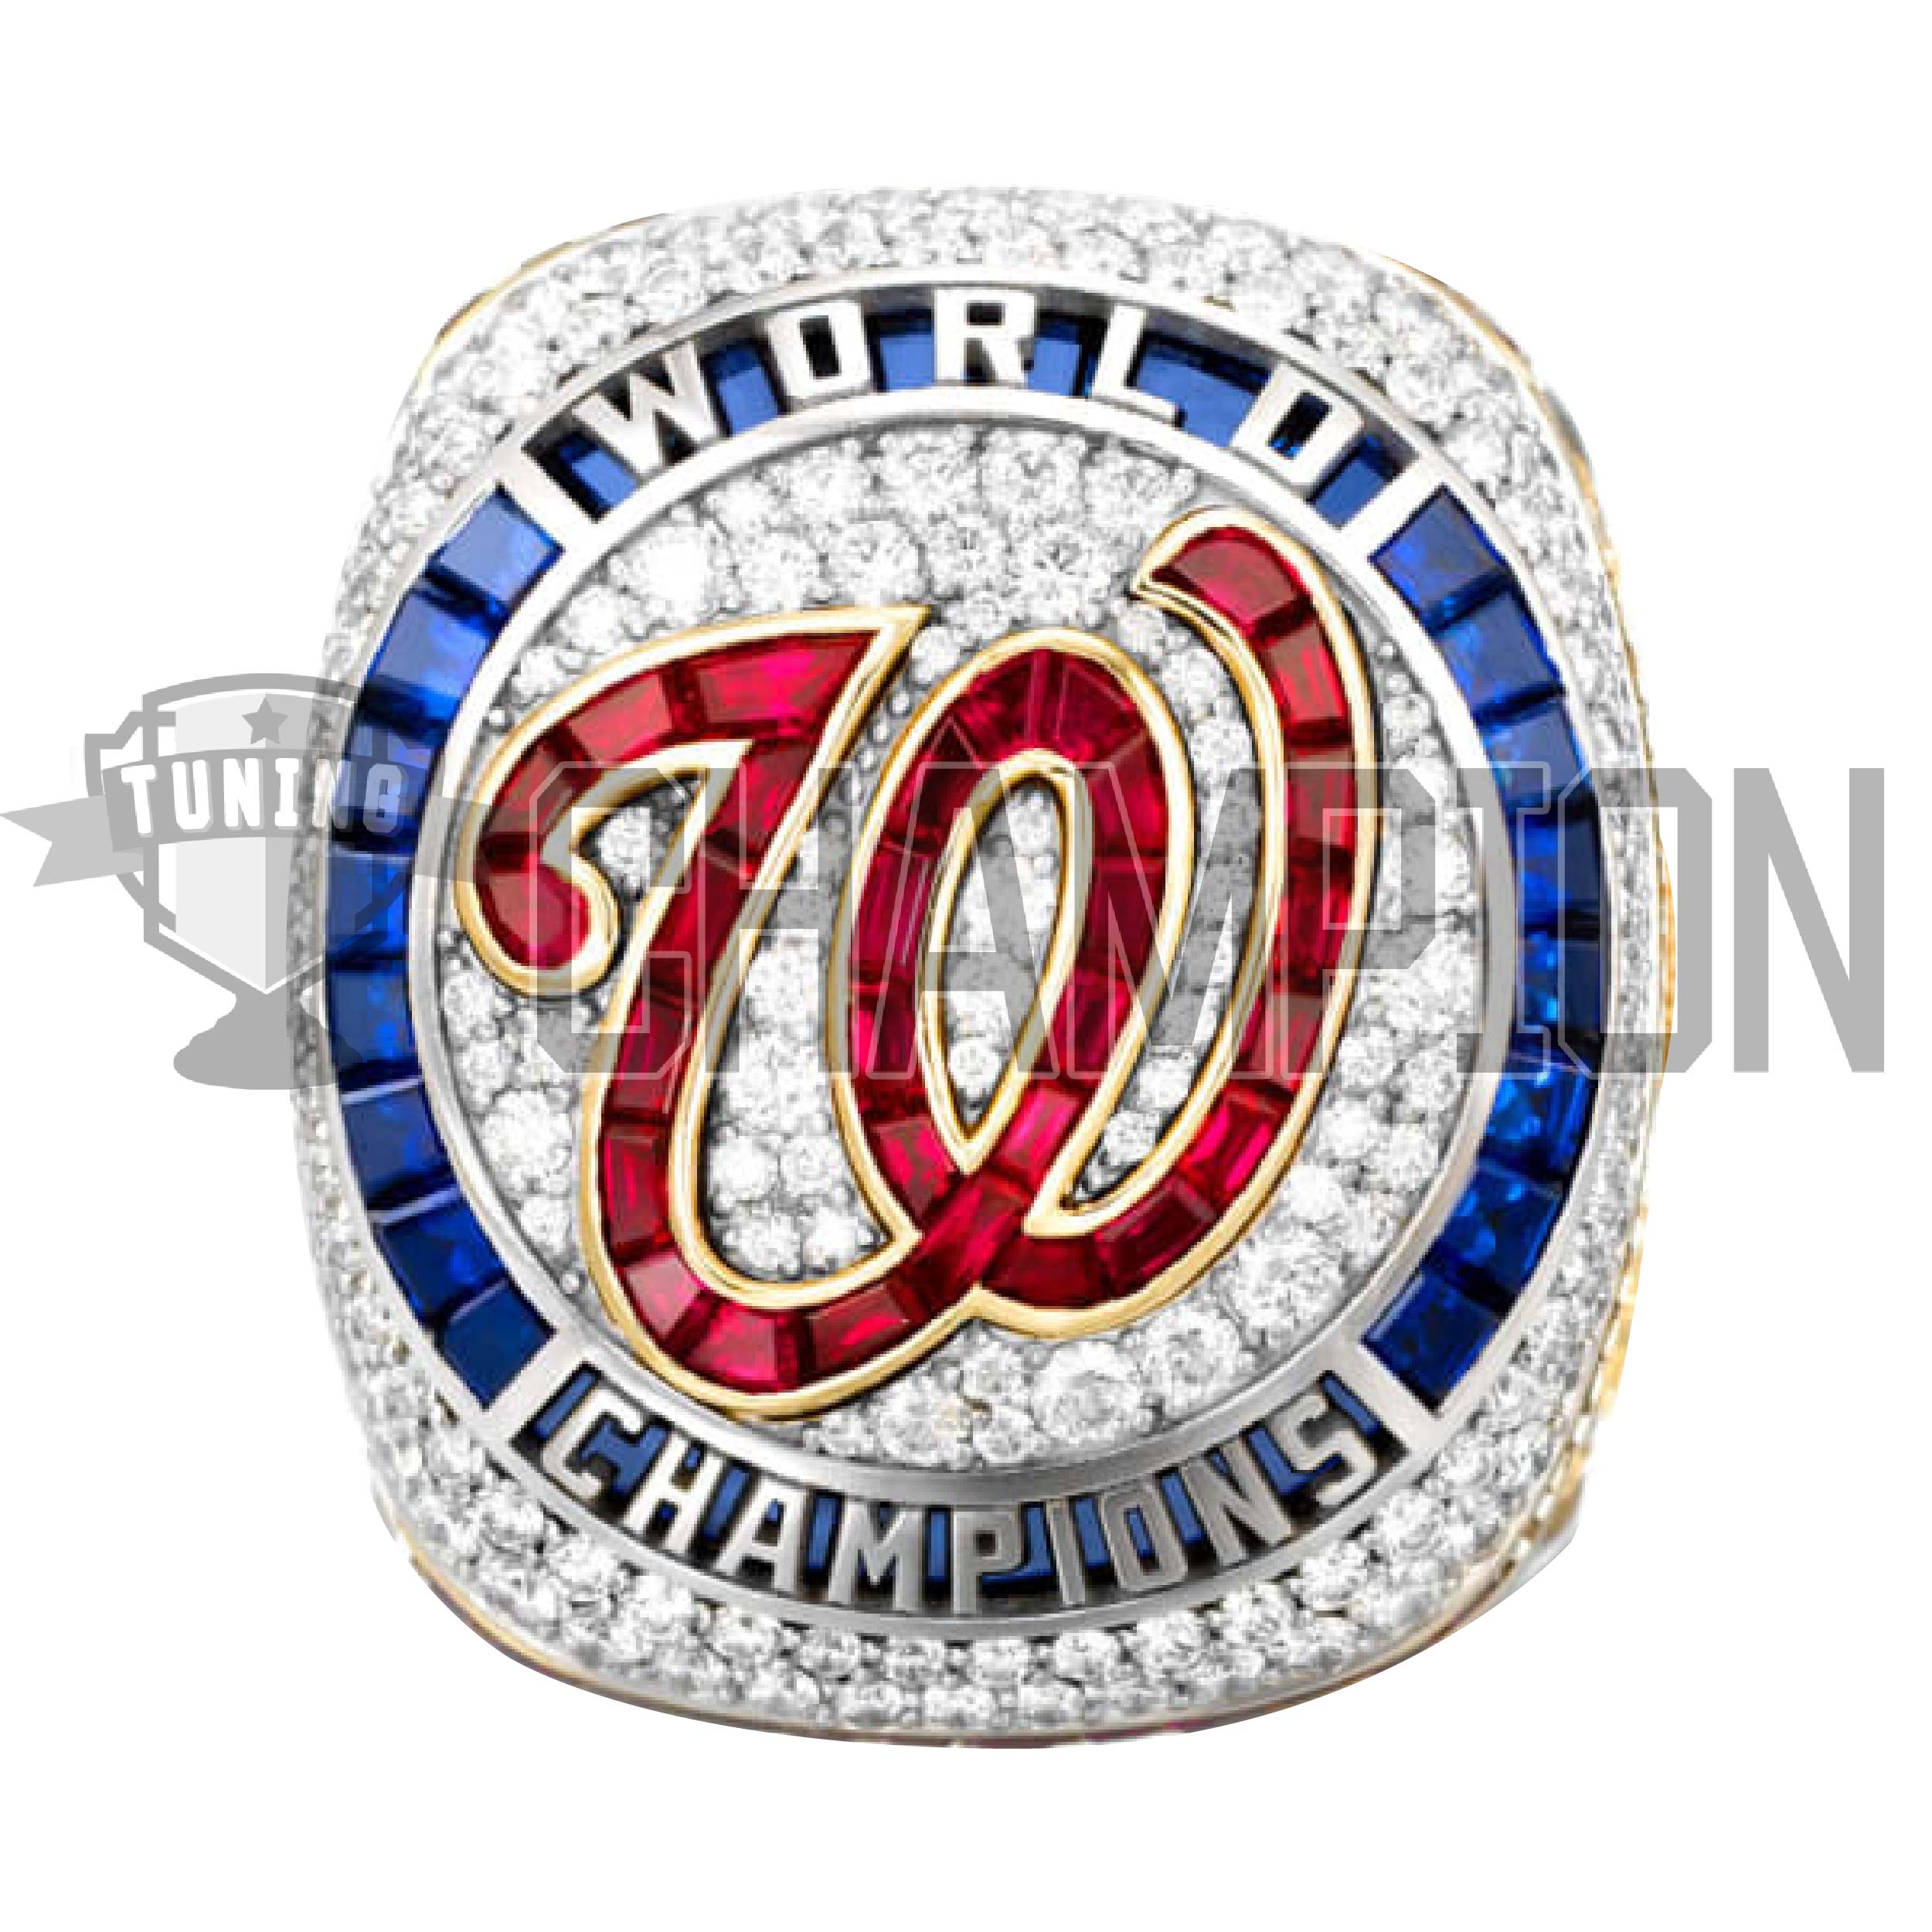 2019 Washington Nationals World Series Championship Ring